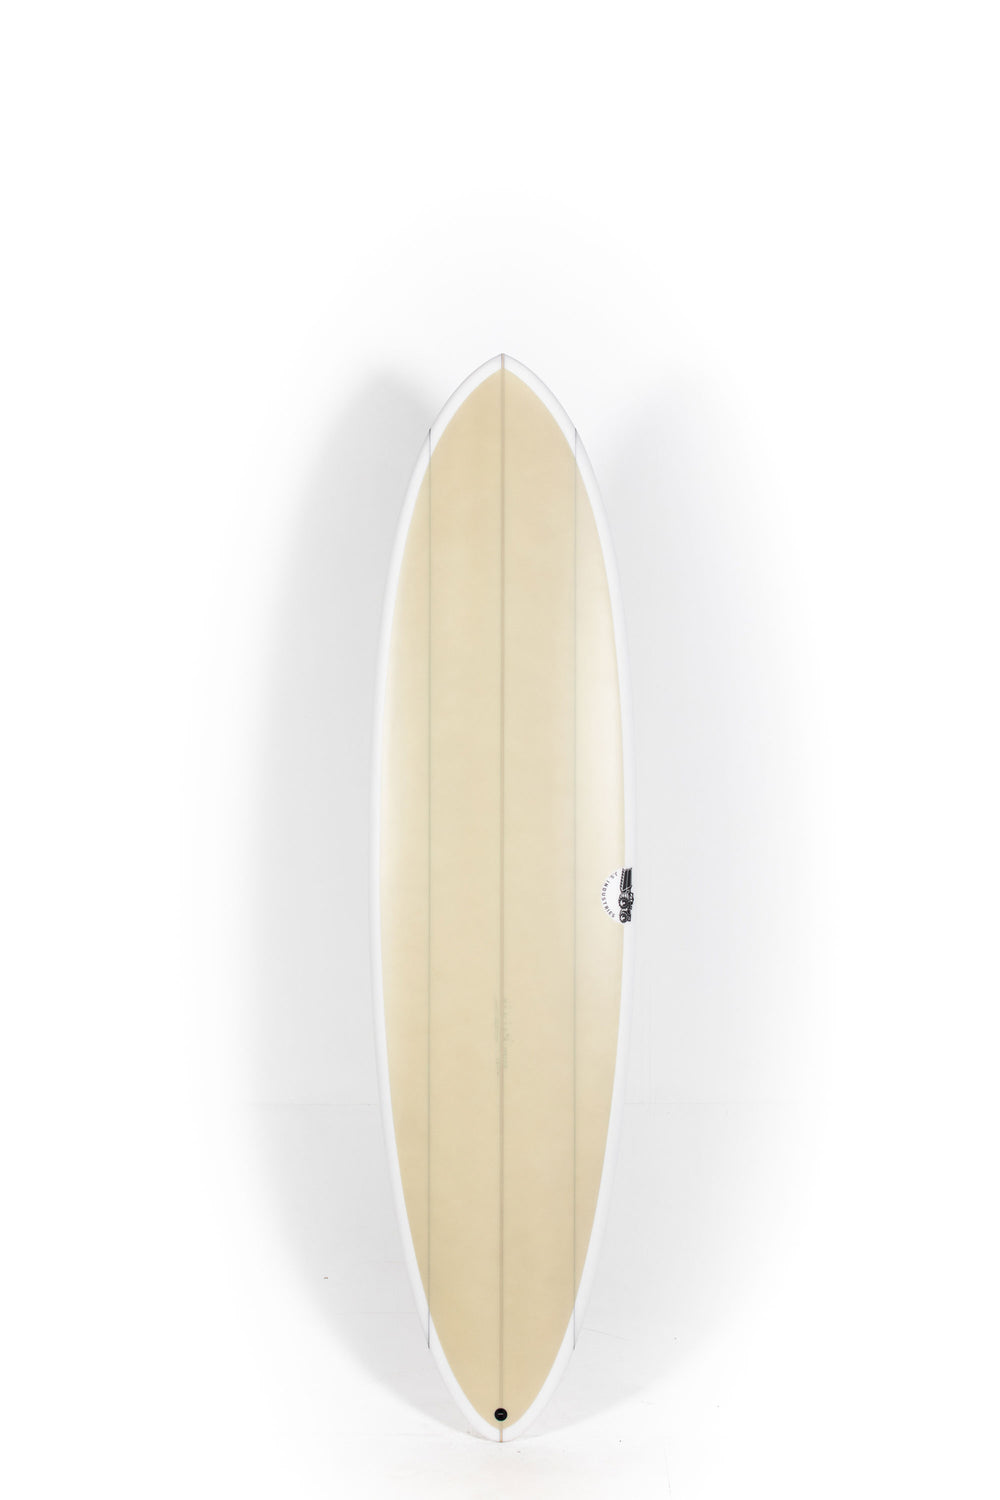 Pukas Surf Shop - JS Surfboards - BIG BARON - 7'0